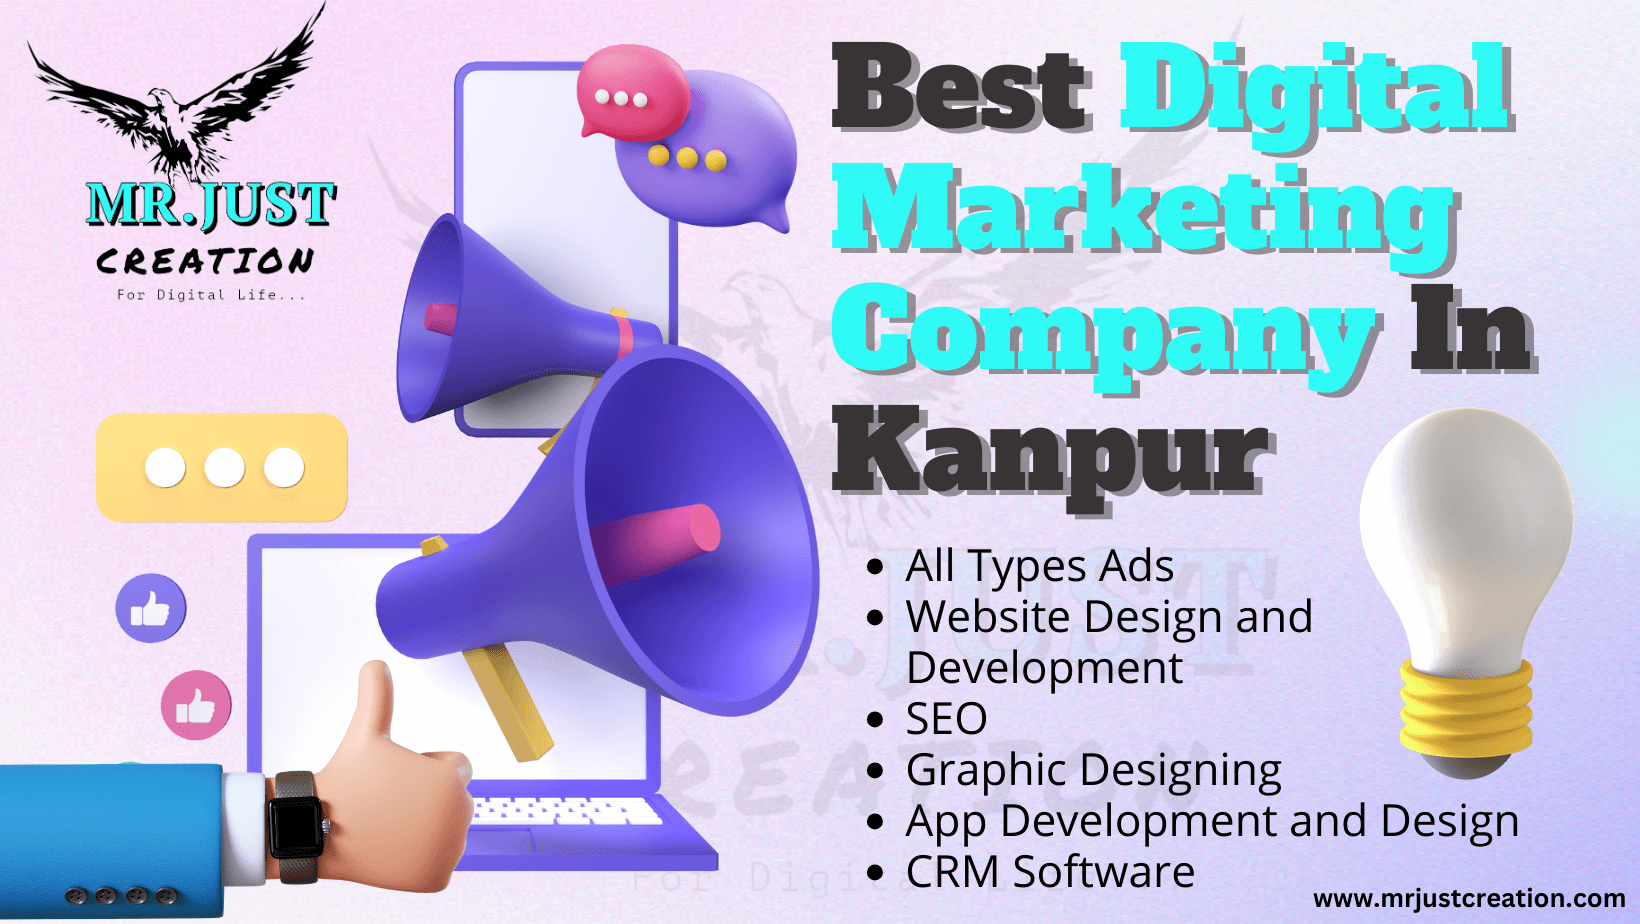 BEST DIGITAL MARKETING COMPANY IN KANPUR